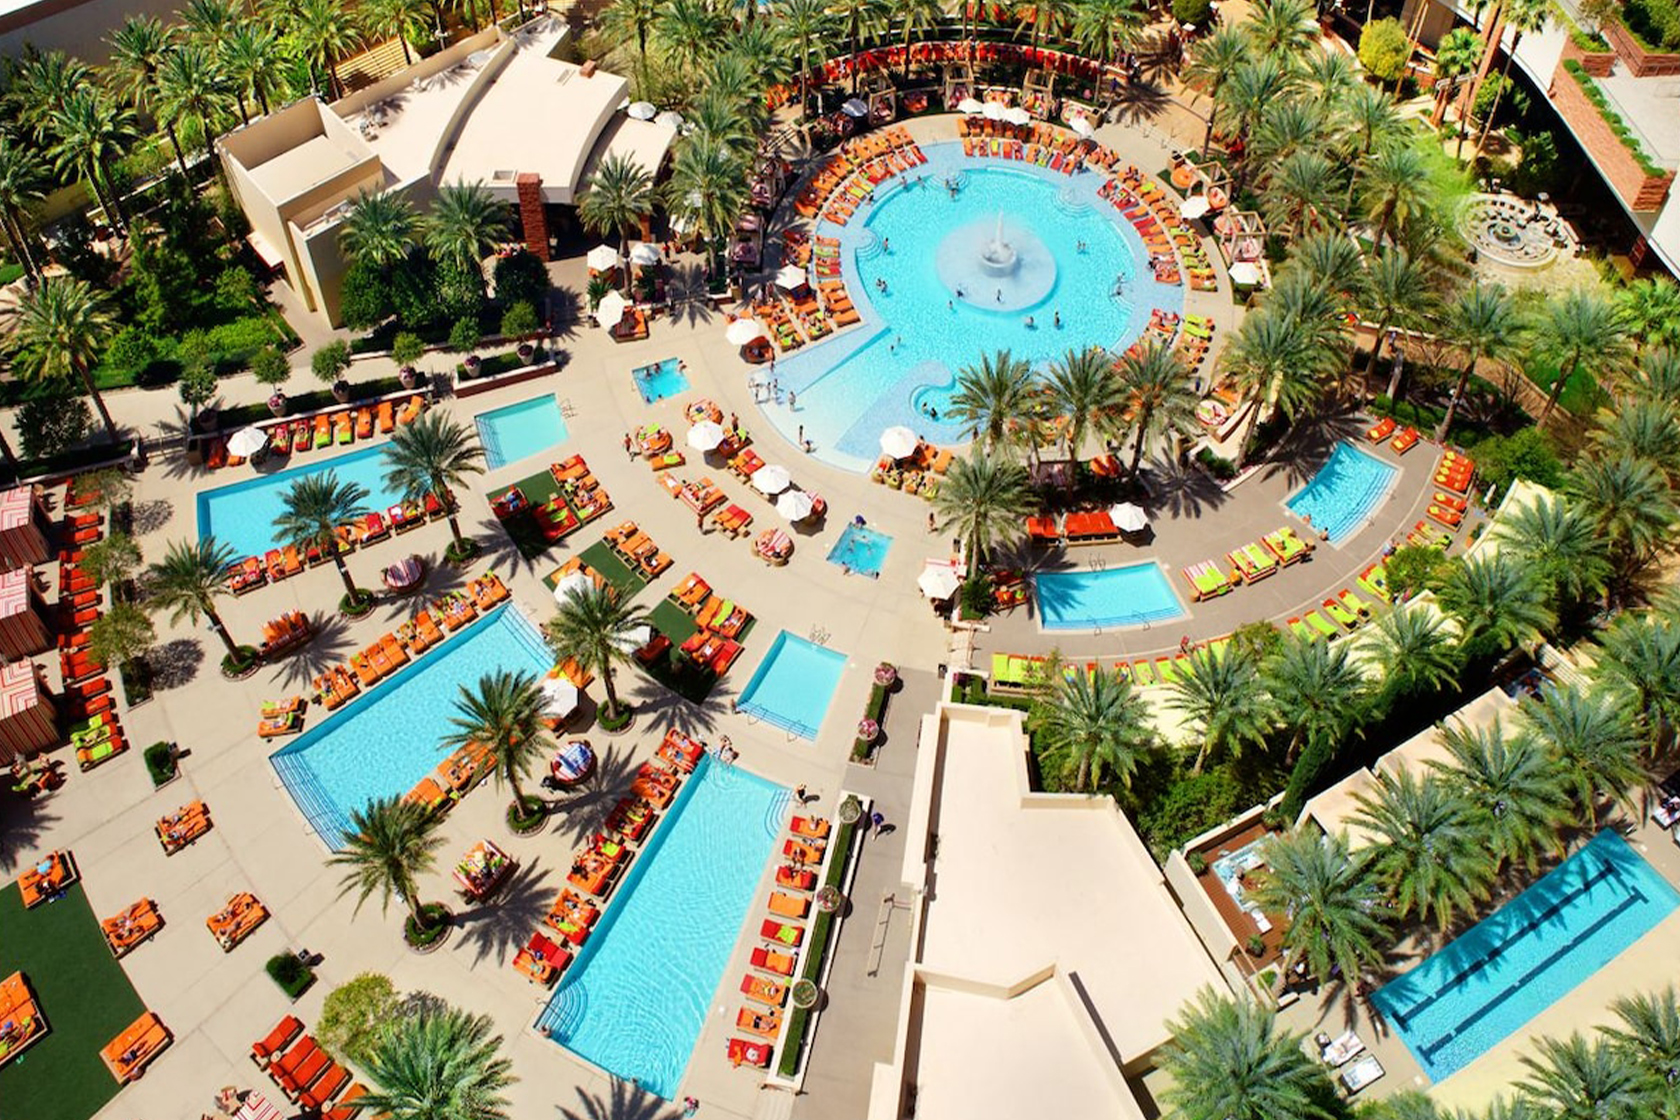 Best Las Vegas hotels for spring break